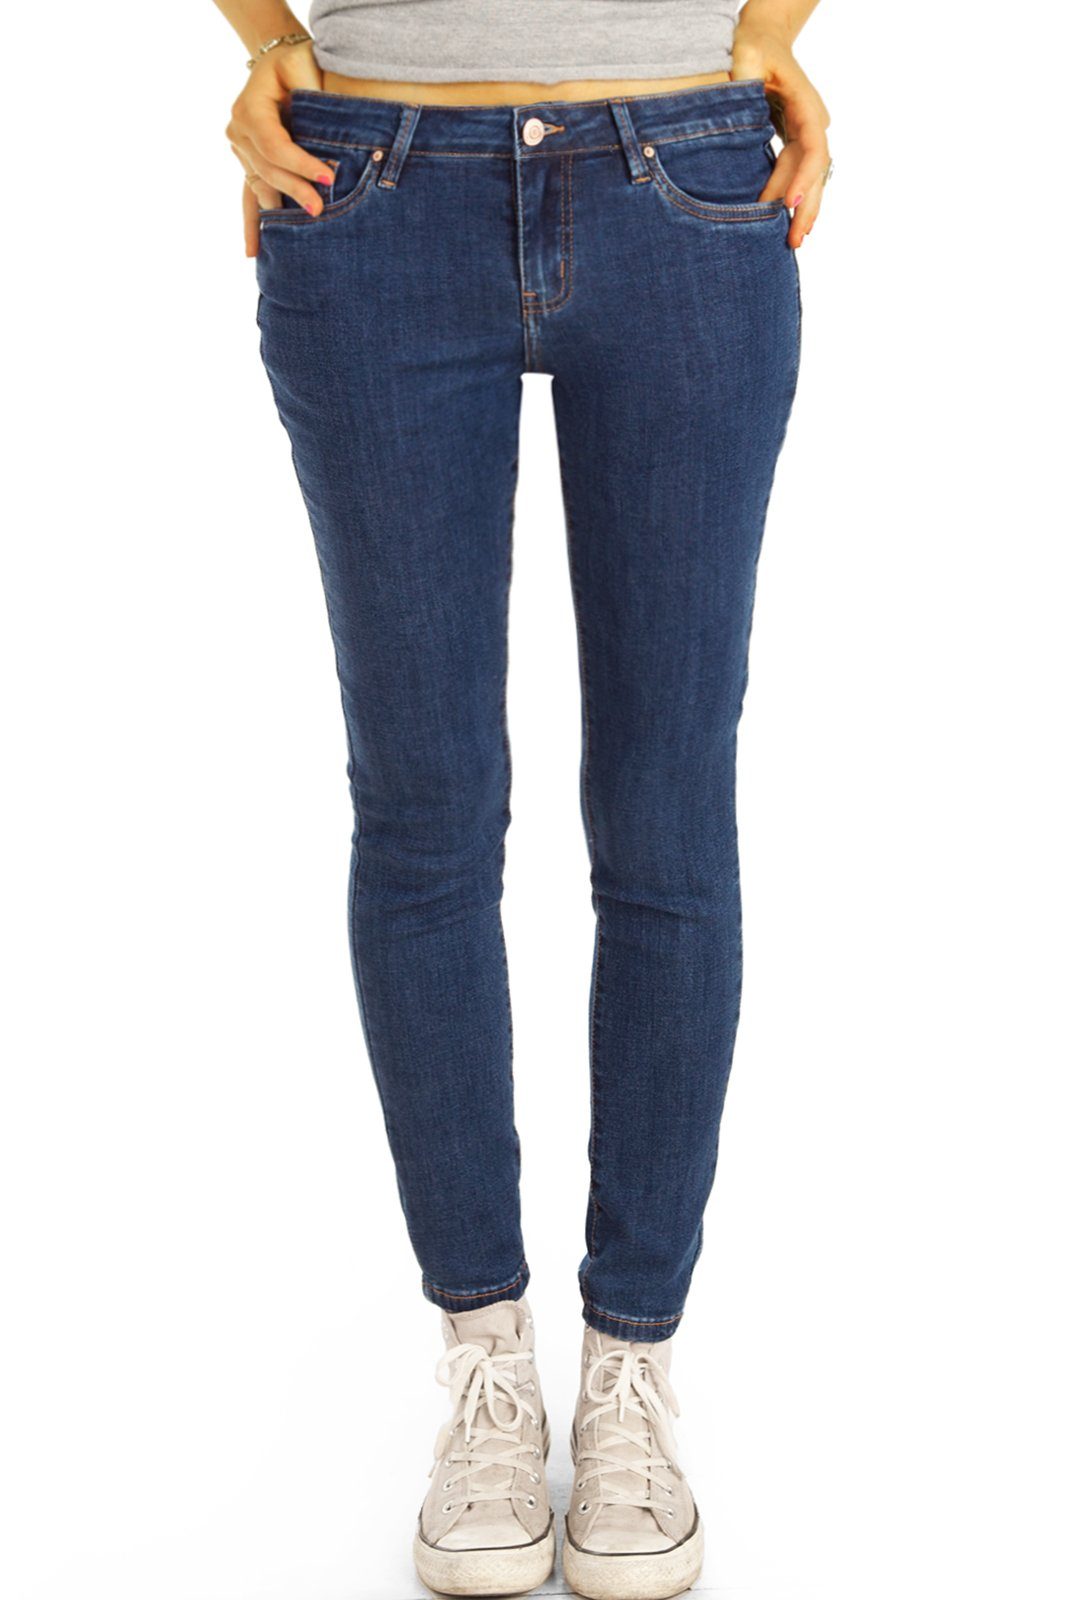 Stretch-Anteil, mit Hose Skinny Low-rise-Jeans Stretch - Damen- j27p-1 dunkelblau Hüftjeans styled Röhrenjeans slim - be 5-Pocket-Style